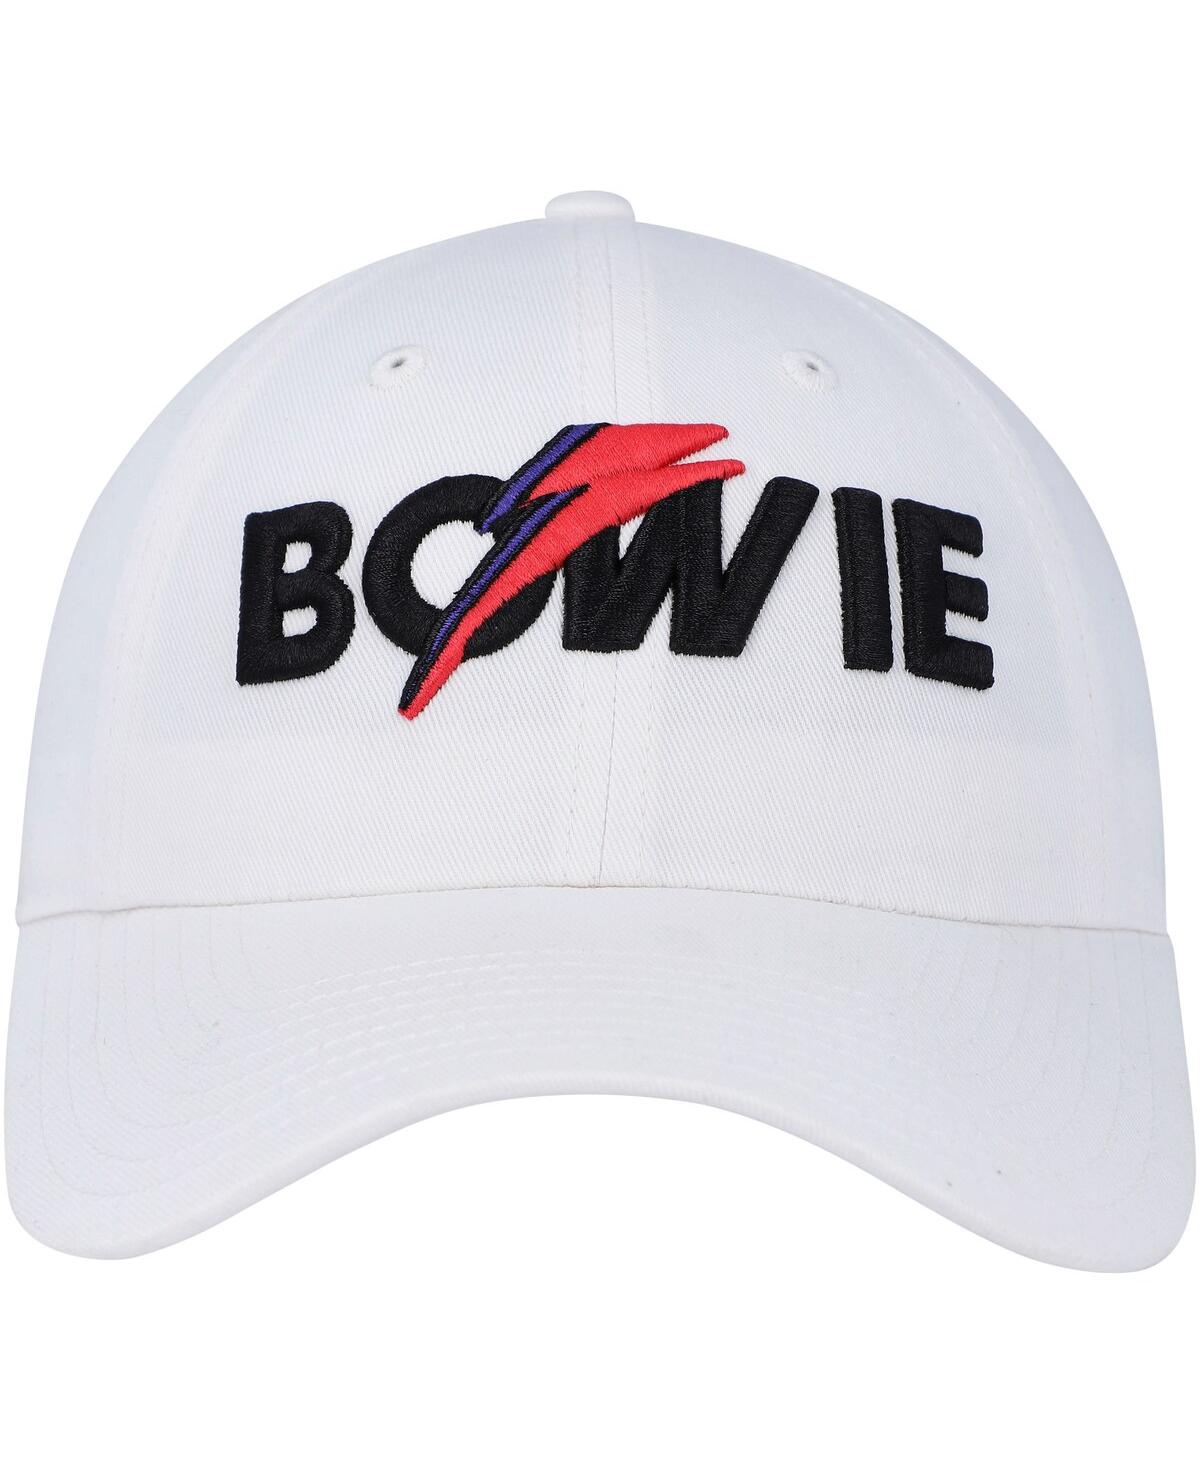 Shop American Needle Men's  White David Bowie Ballpark Adjustable Hat